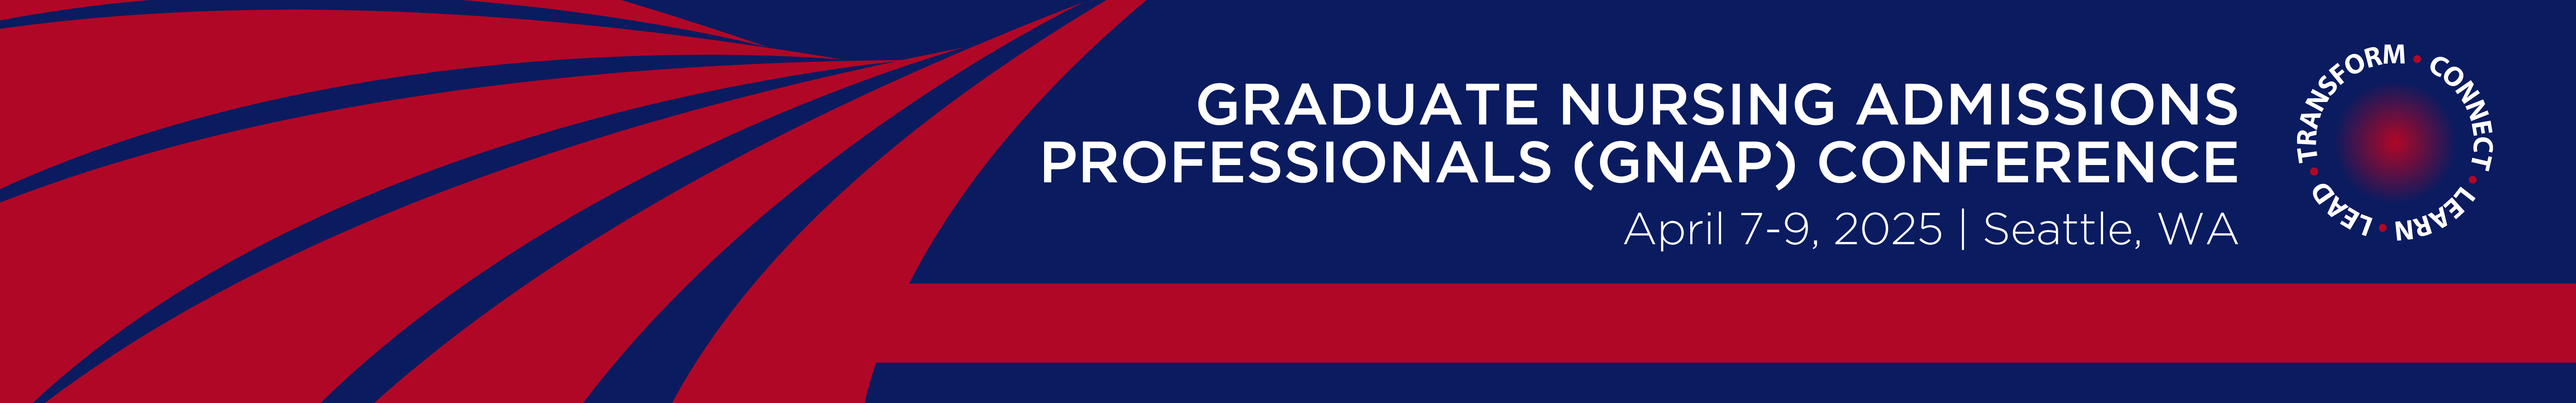 Graduate Nursing Admissions Professionals (GNAP) Conference